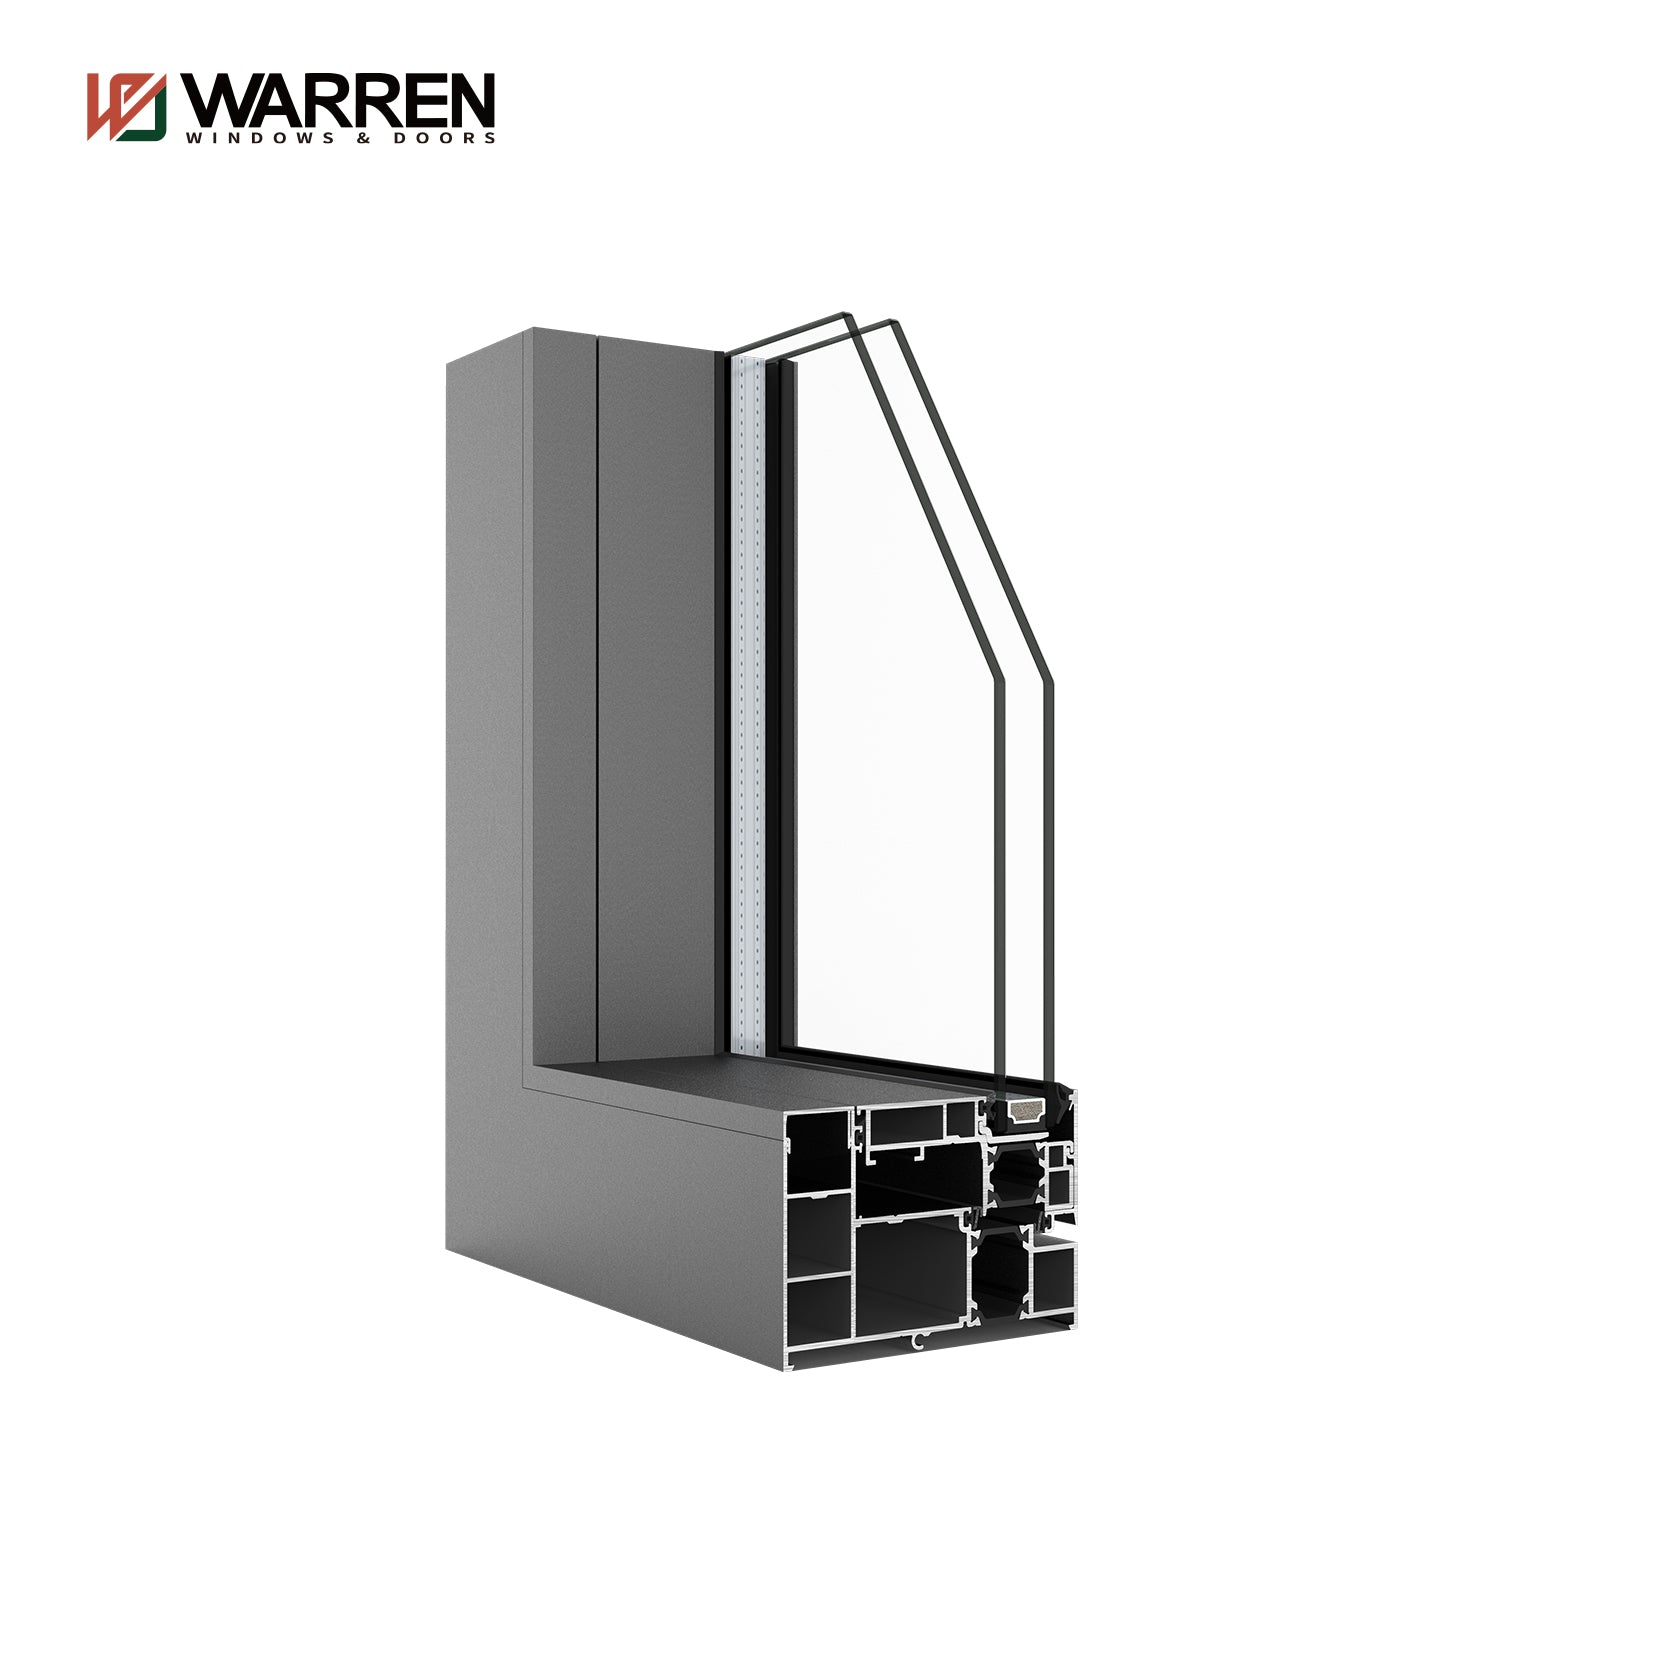 Warren New Design Good Quality Aluminium Casement Window Profile American Style Casement Windows